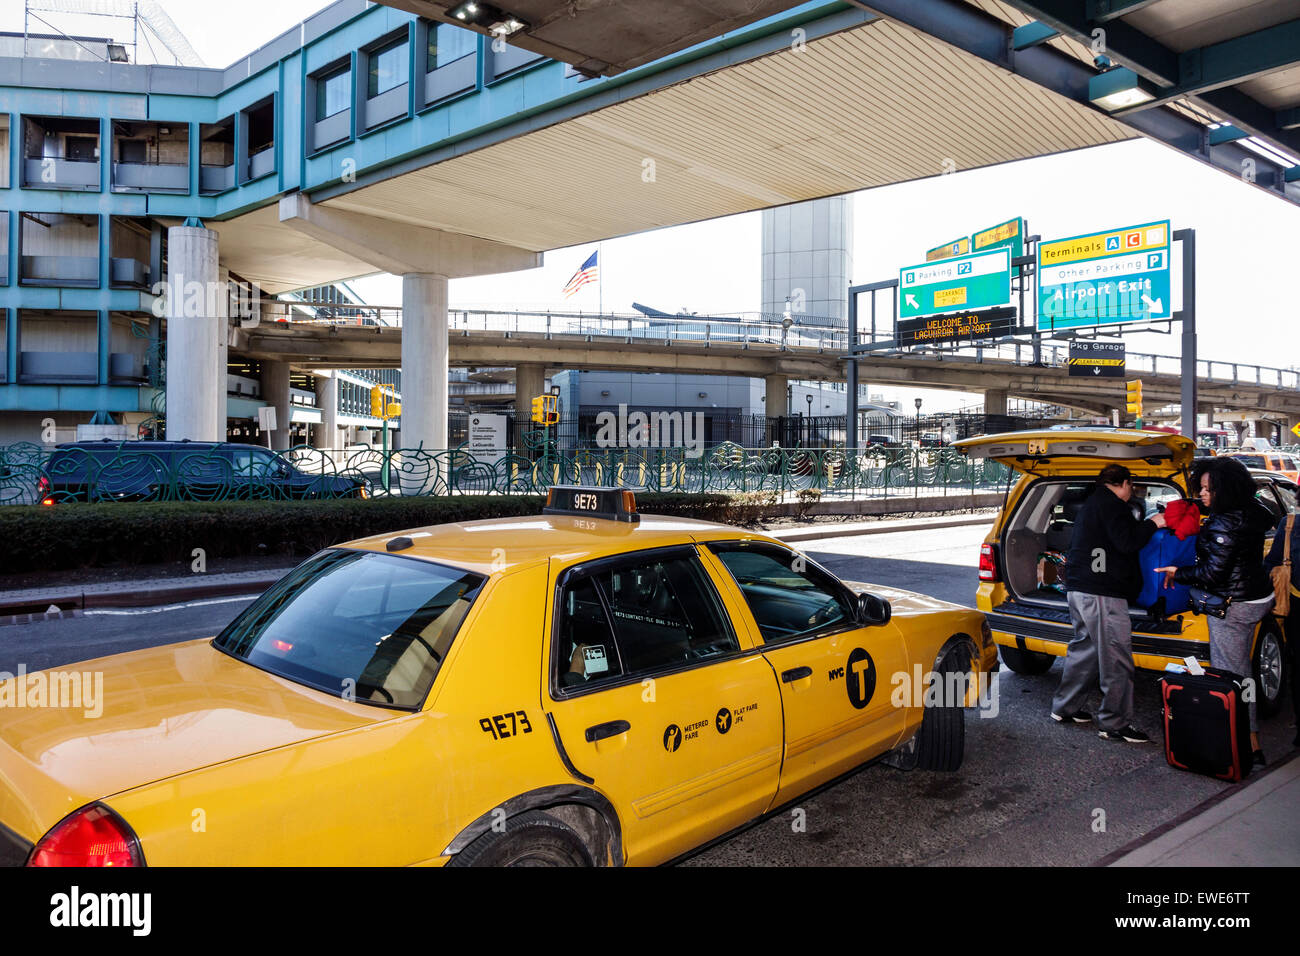 New York City,NY NYC,Queens,LaGuardia Airport,LGA,outside exterior,taxi,cab,picking up passenger,NY150325011 Stock Photo